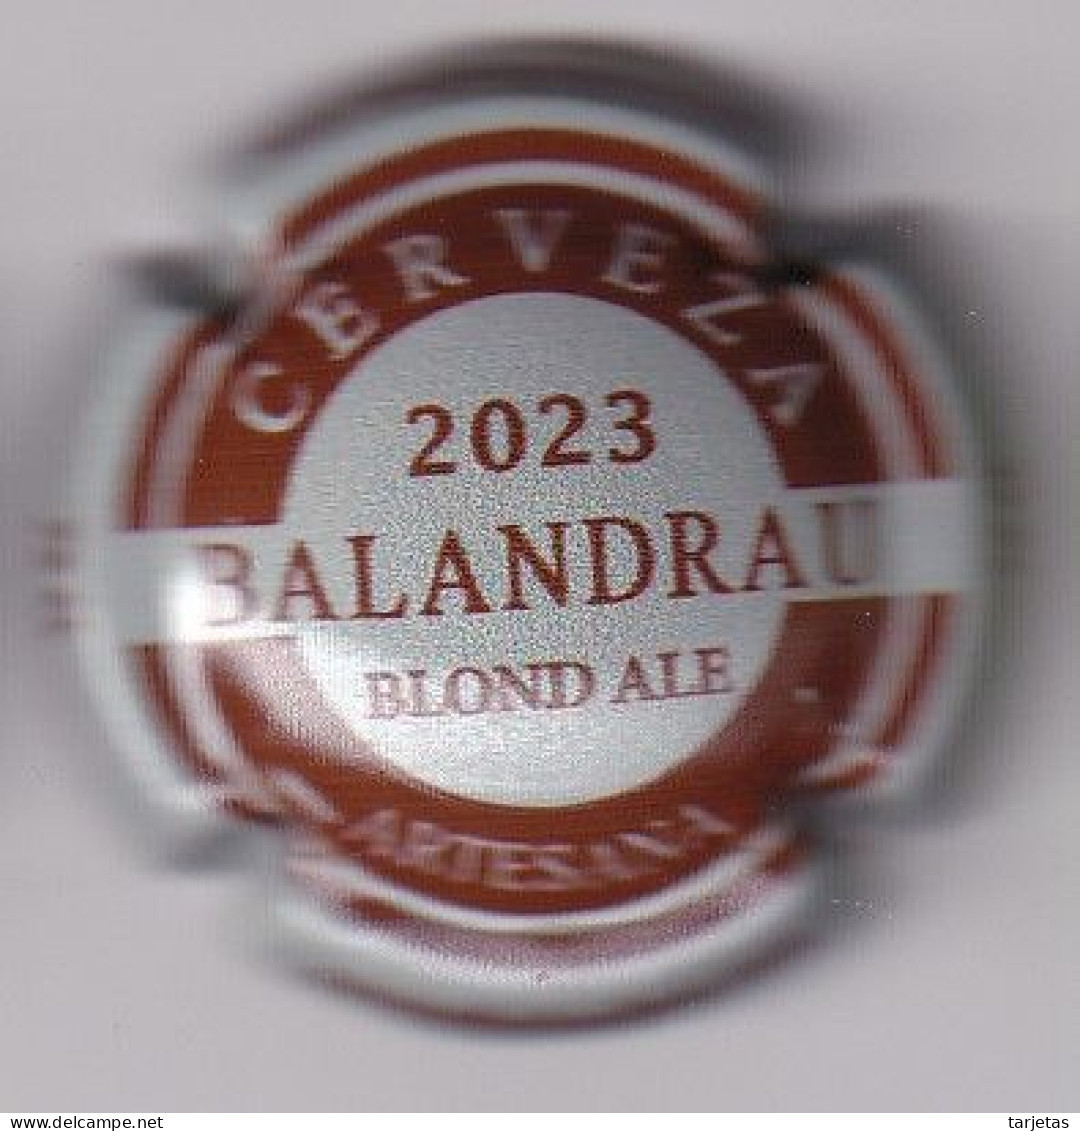 CHAPA DE CERVEZA ARTESANA BALANDRAU BLOND ALE 2023 (BEER-BIERE) CORONA - Cerveza